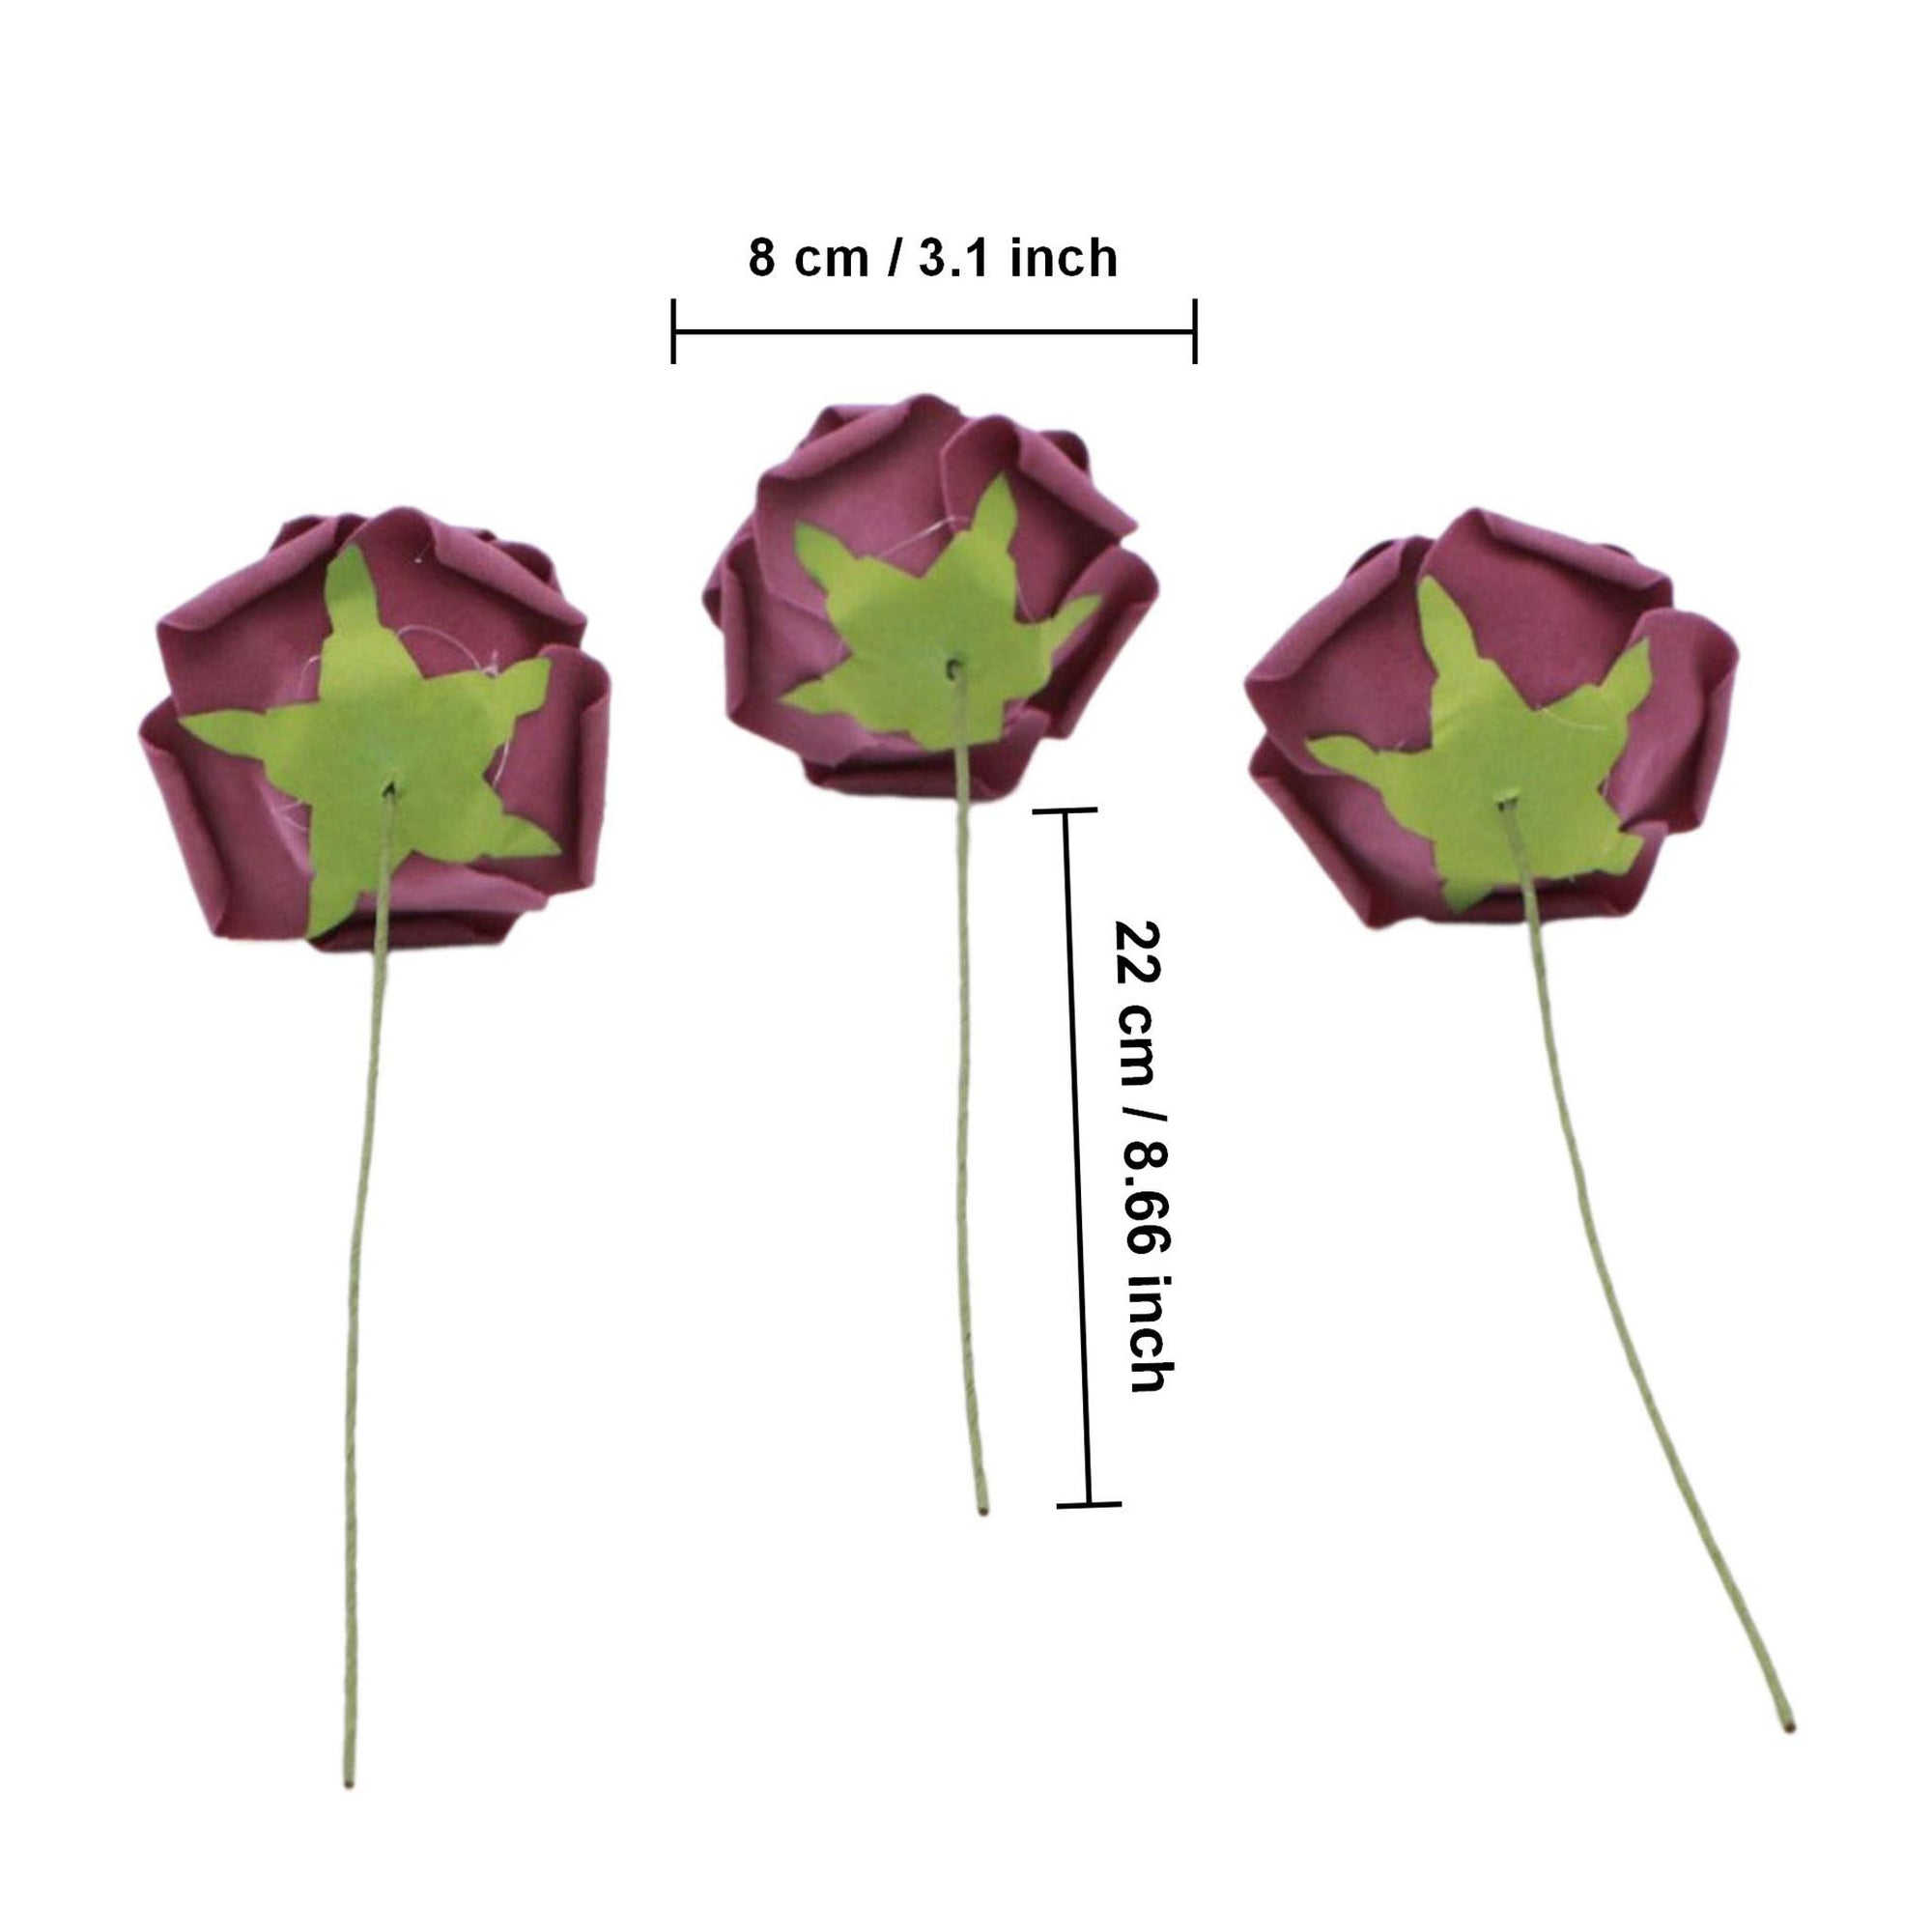 Plum Rose Flowers Artificial Flower Fake Roses